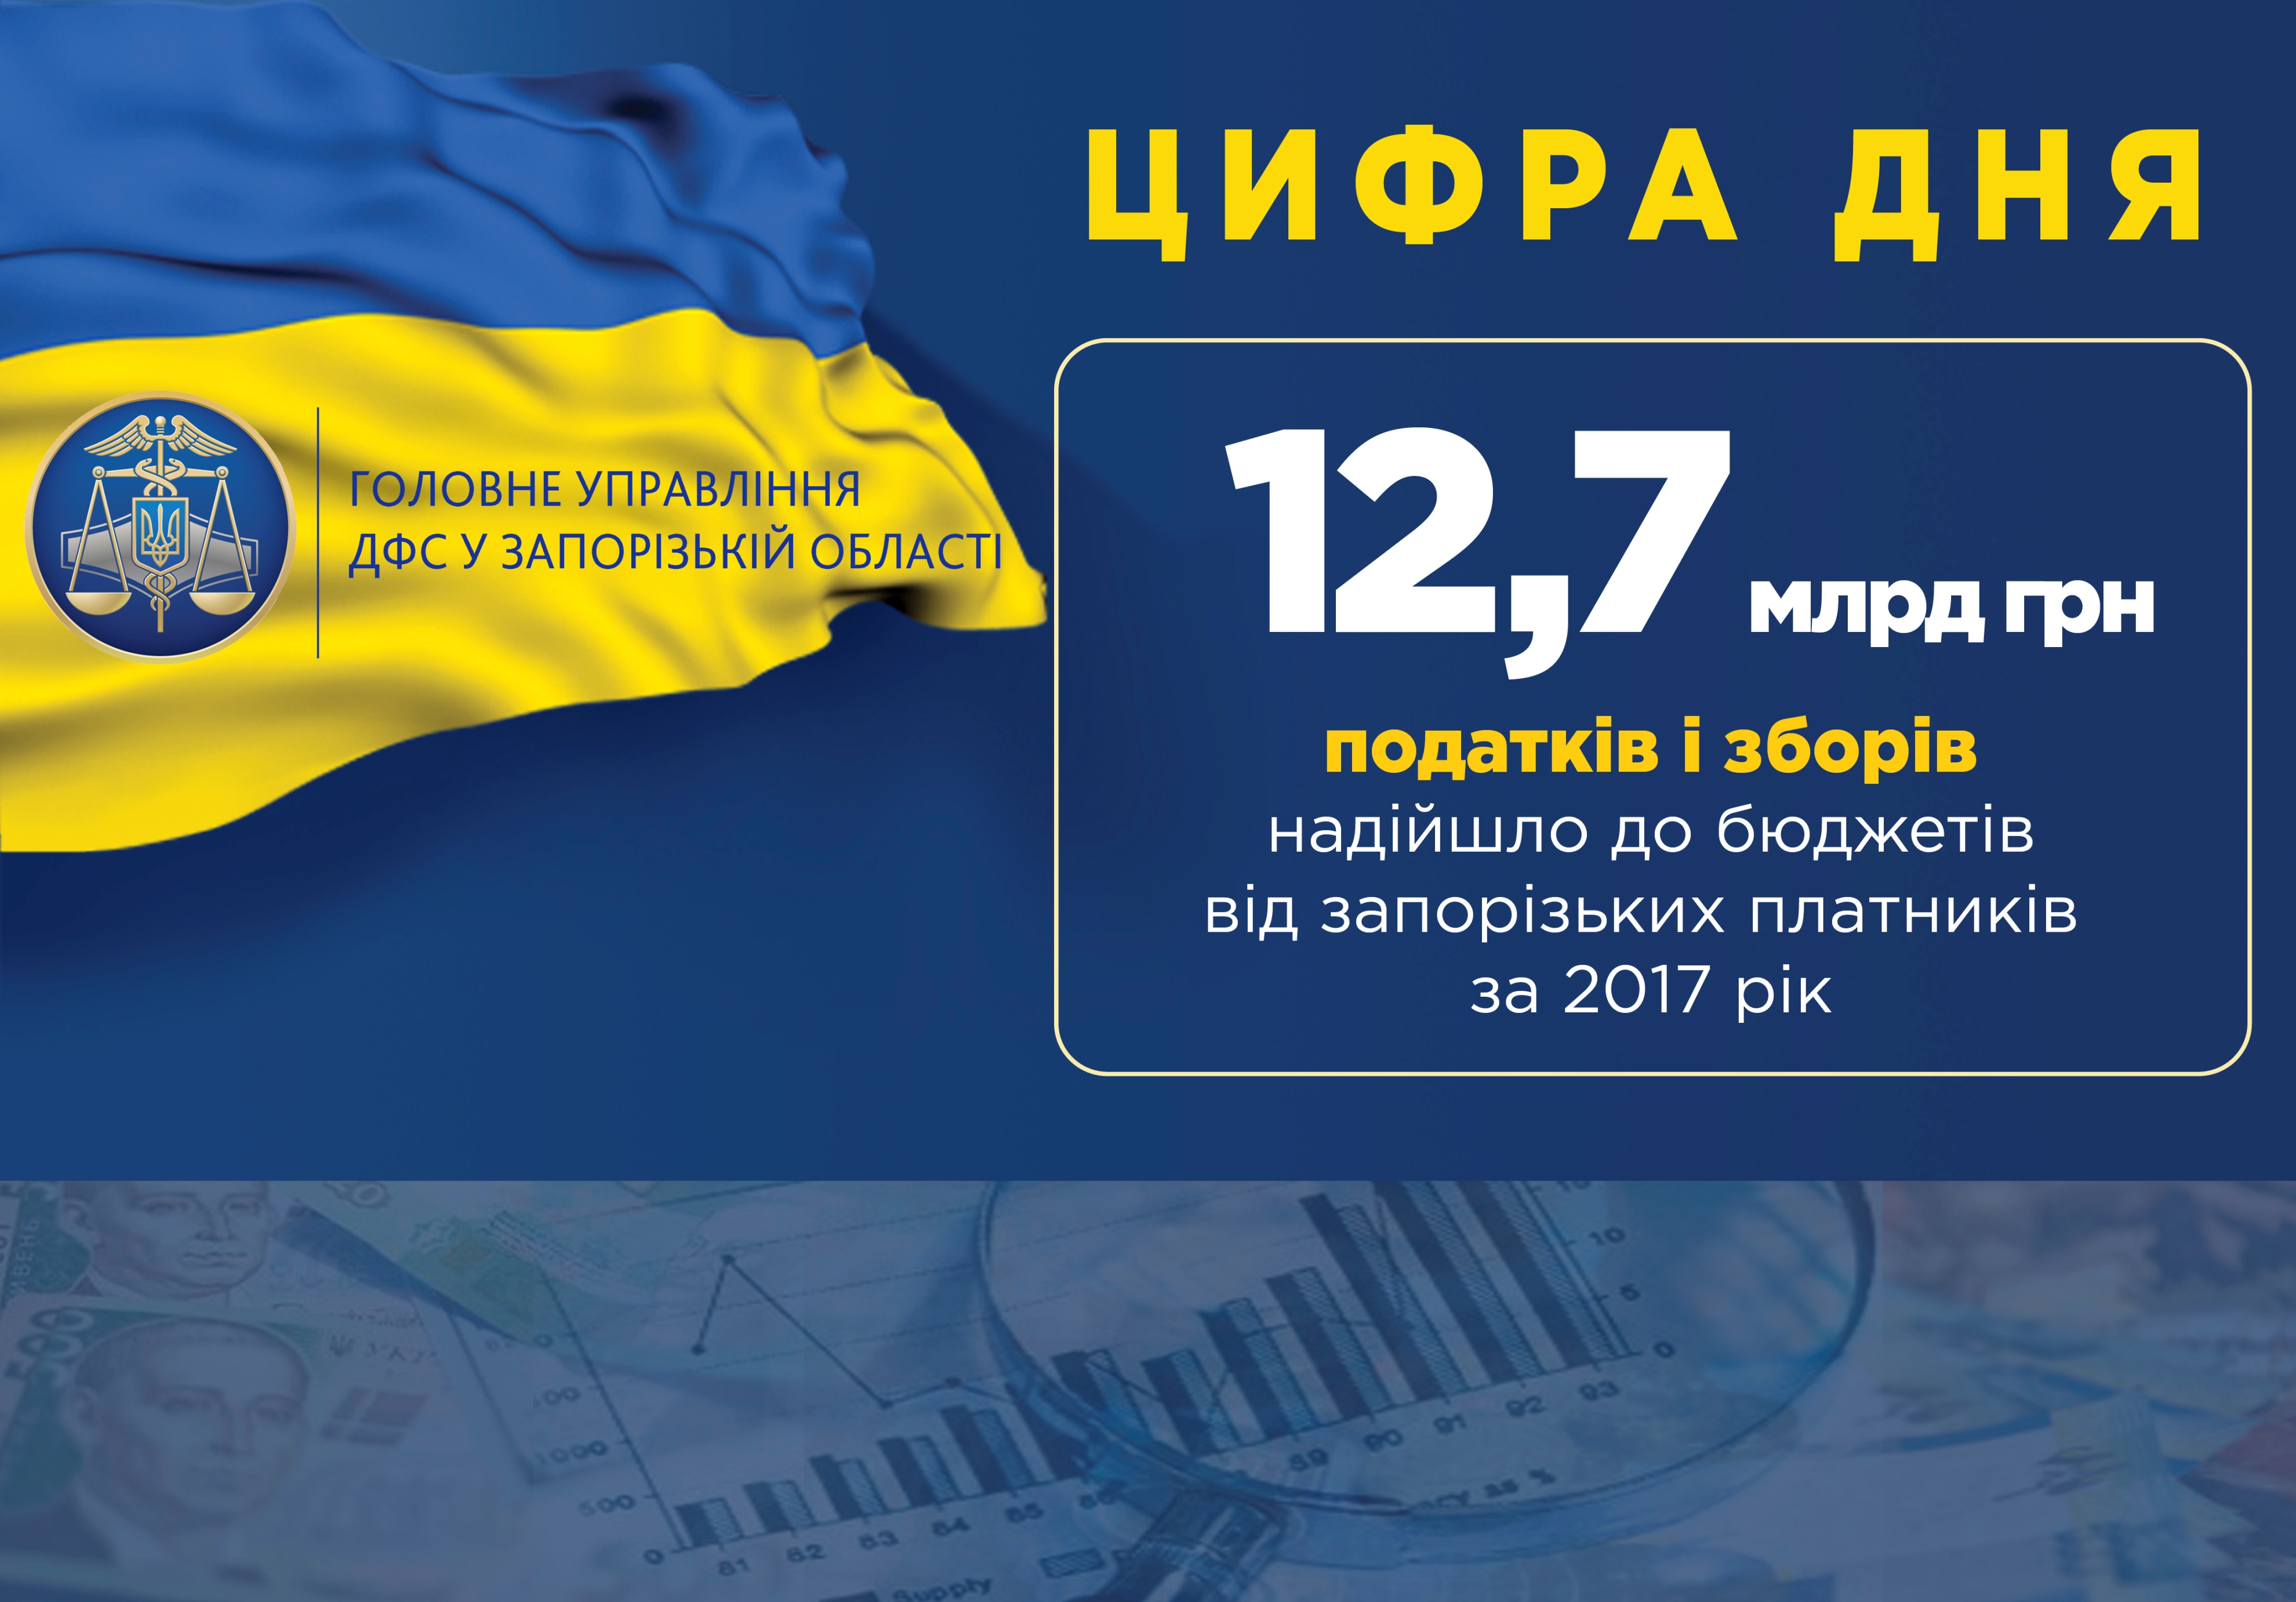 В 2017 году запорожцы пополнили бюджет на 12,7 миллиарда гривен